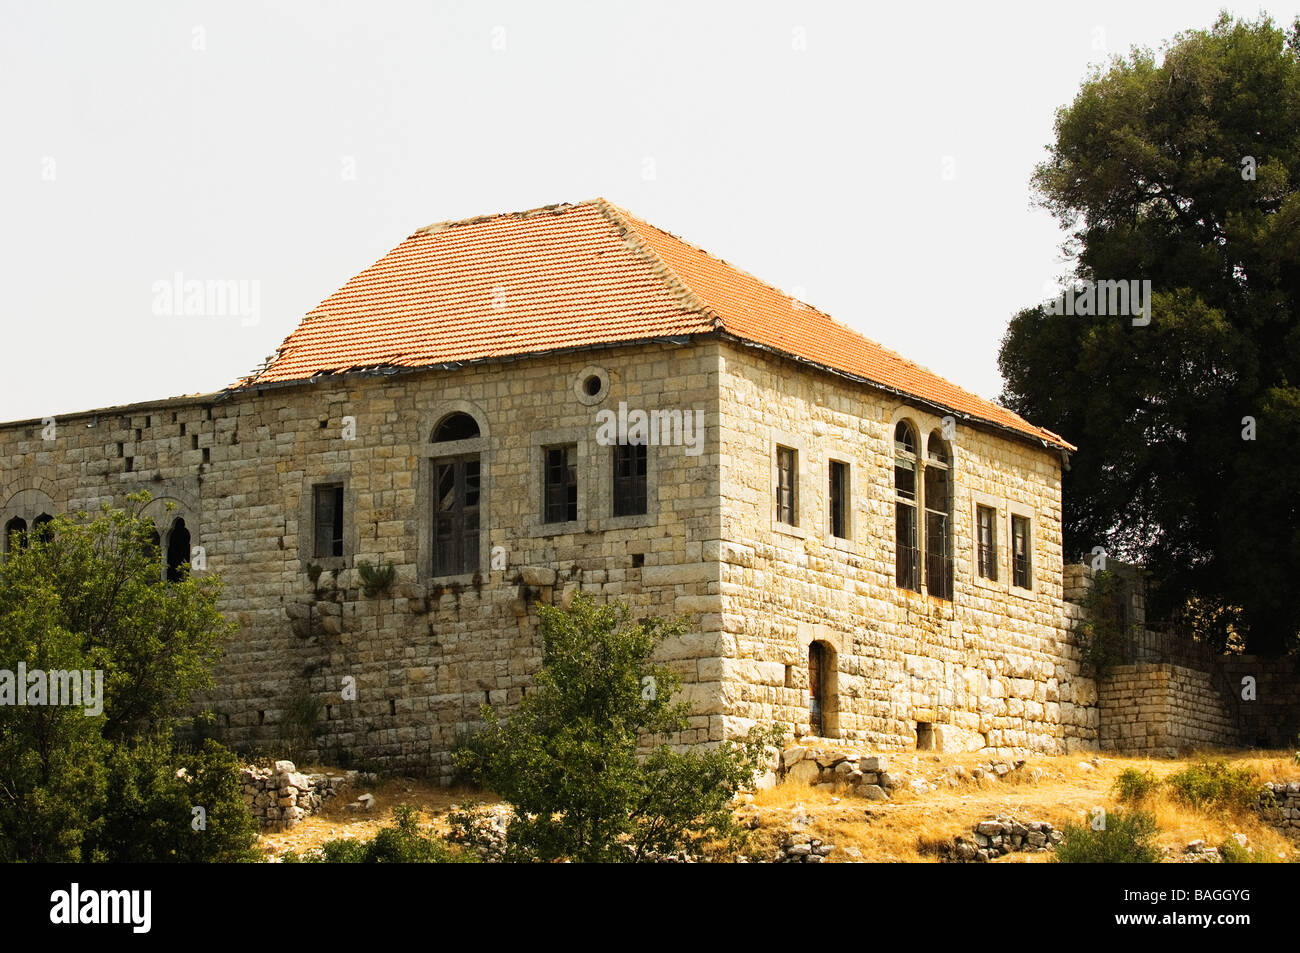 Verlassenen und verfallenen Haus in Libanon, Naher Osten Stockfoto